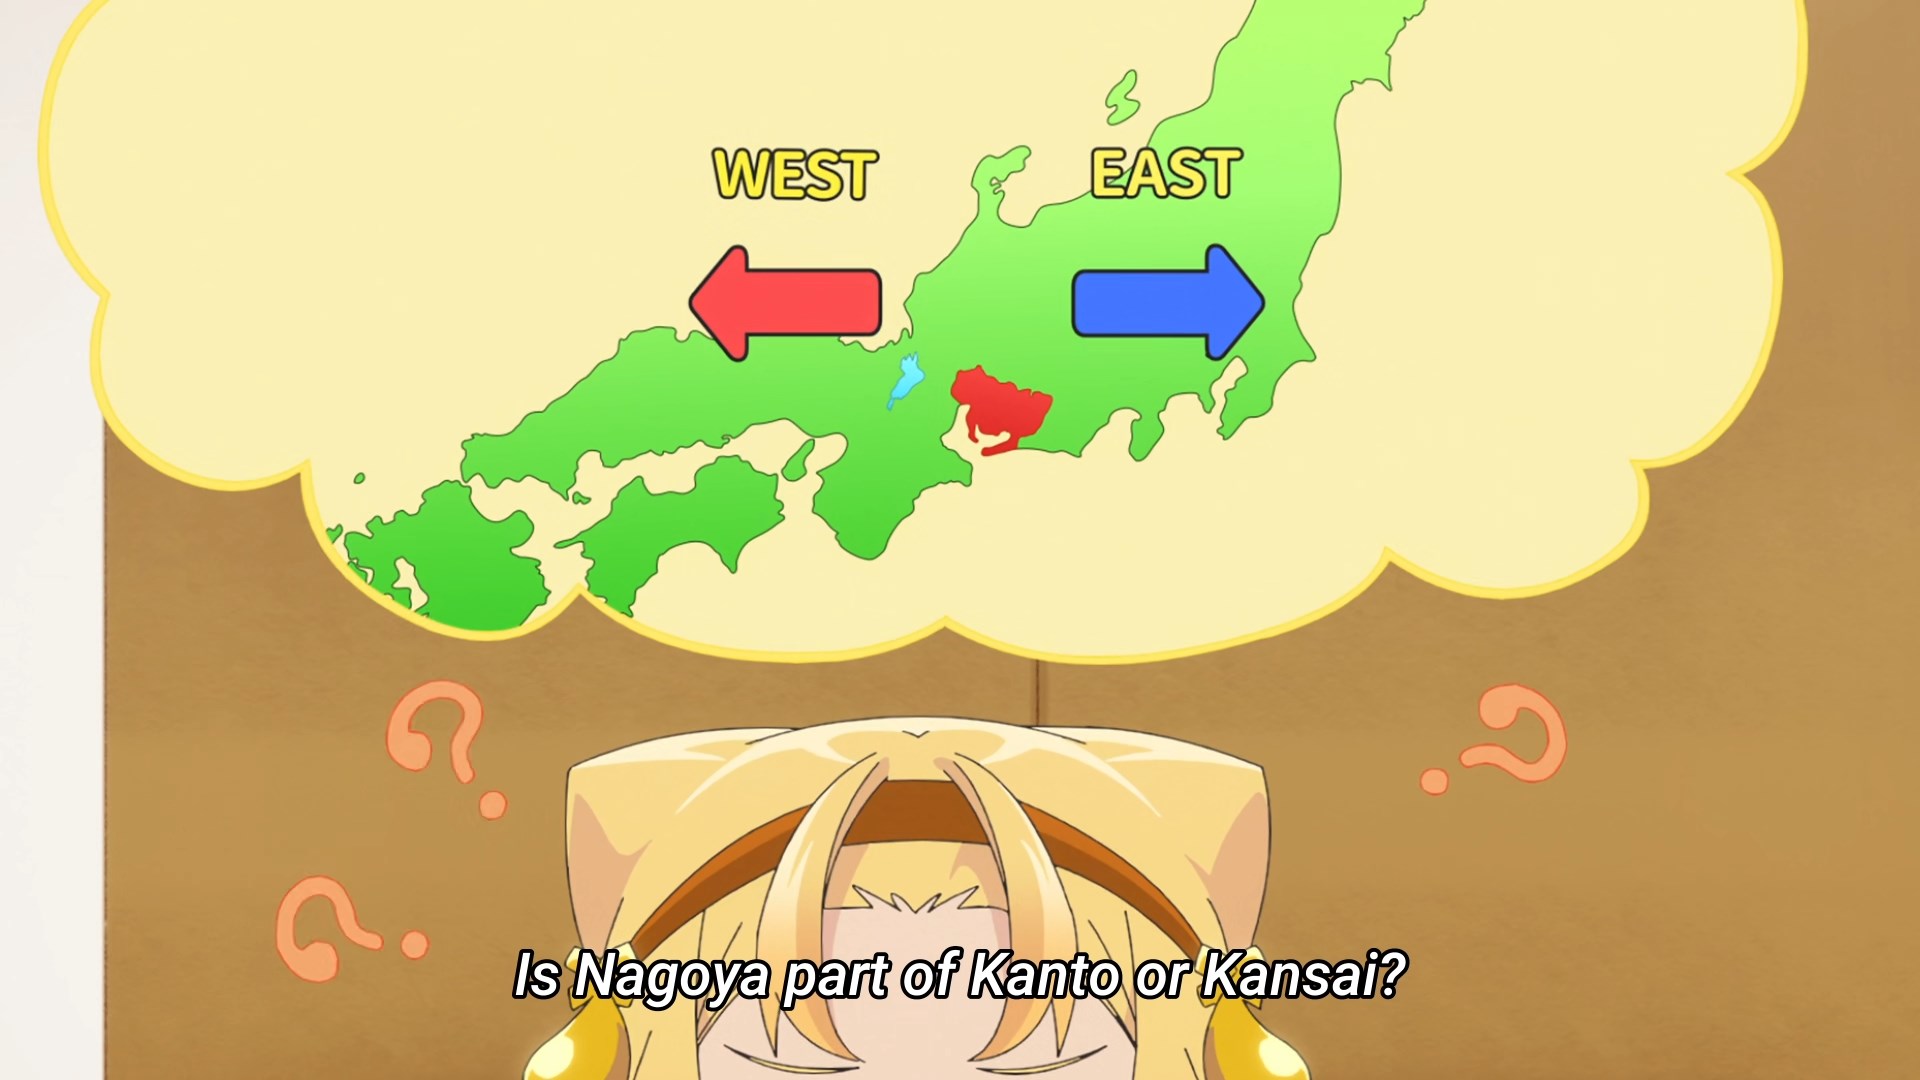 Yotogame-chan wonderign whether Nagoya is part of Kanto or Kansai